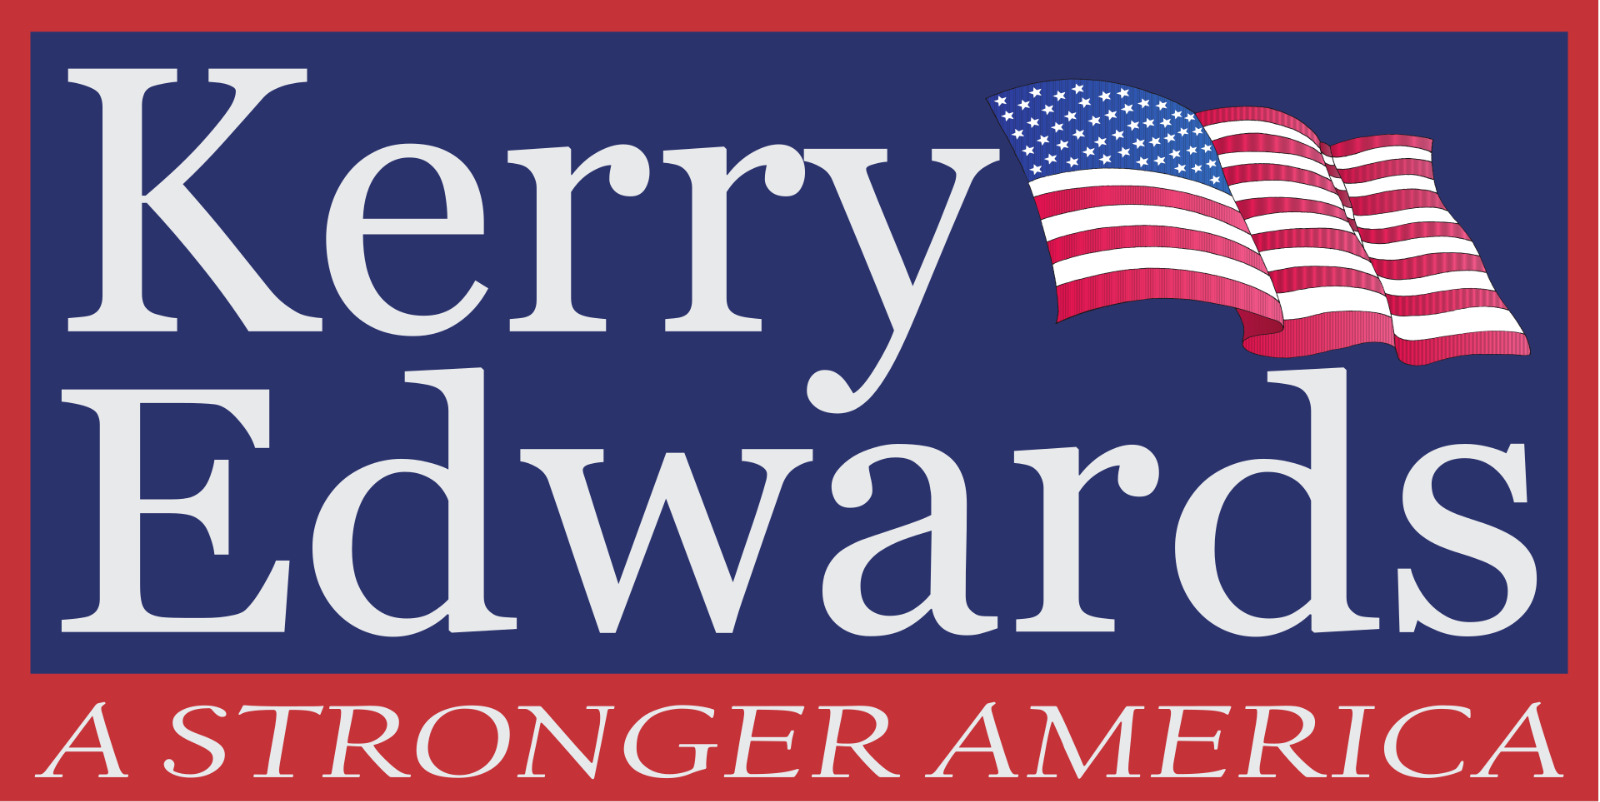 John Kerry John Edwards Replica 2004 President Campaign Bumper Sticker